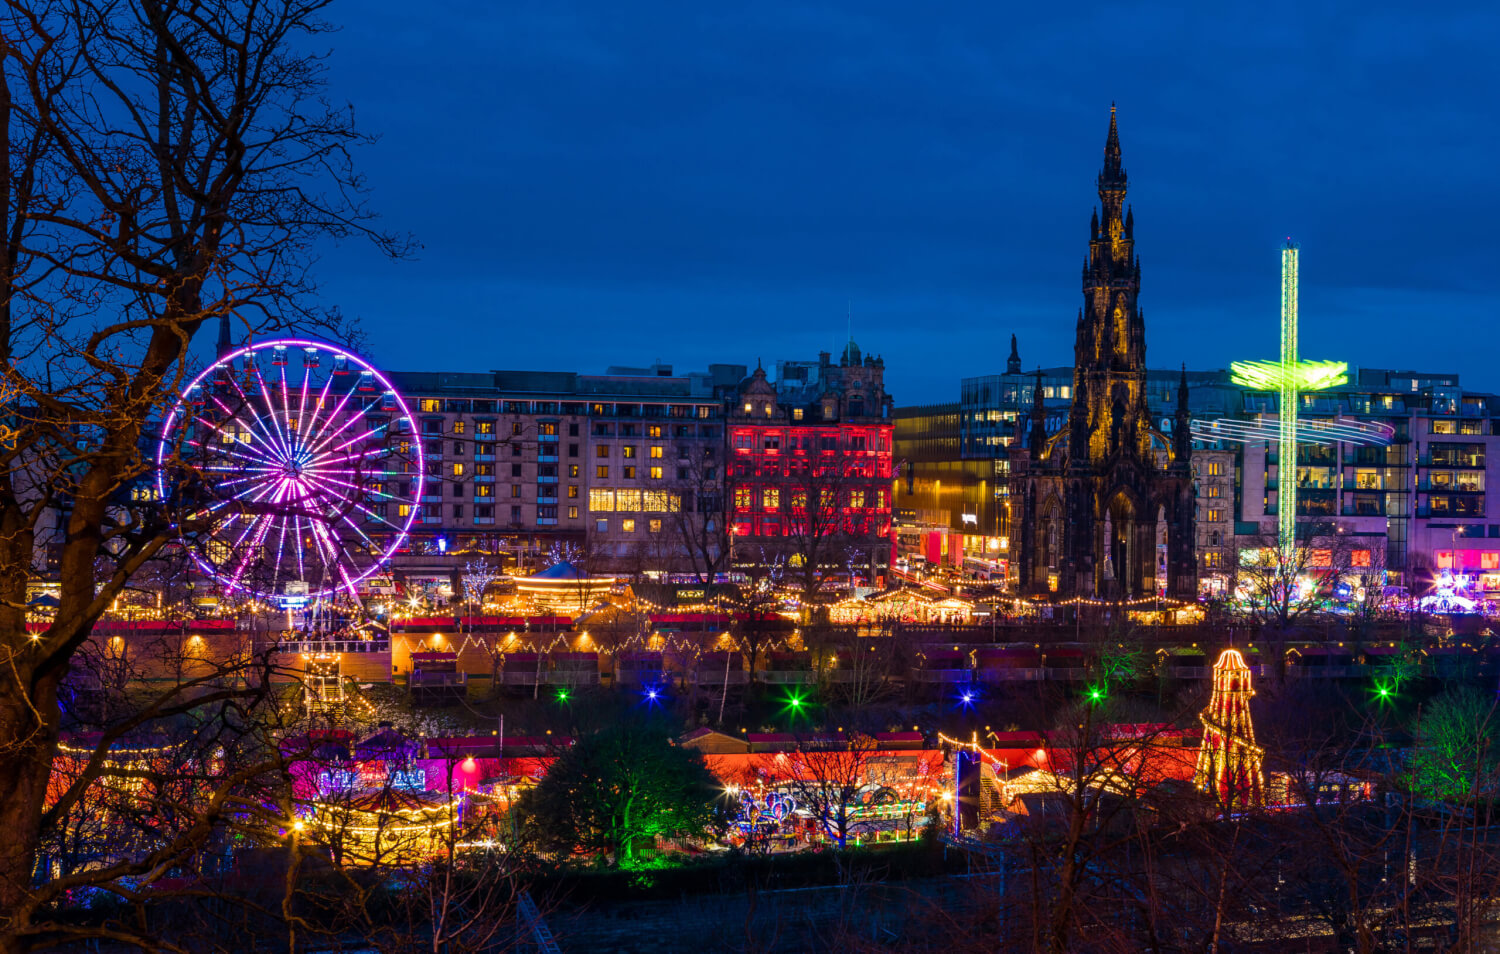 Edinburgh Christmas Markets 2022 | Dates, Hotels & More